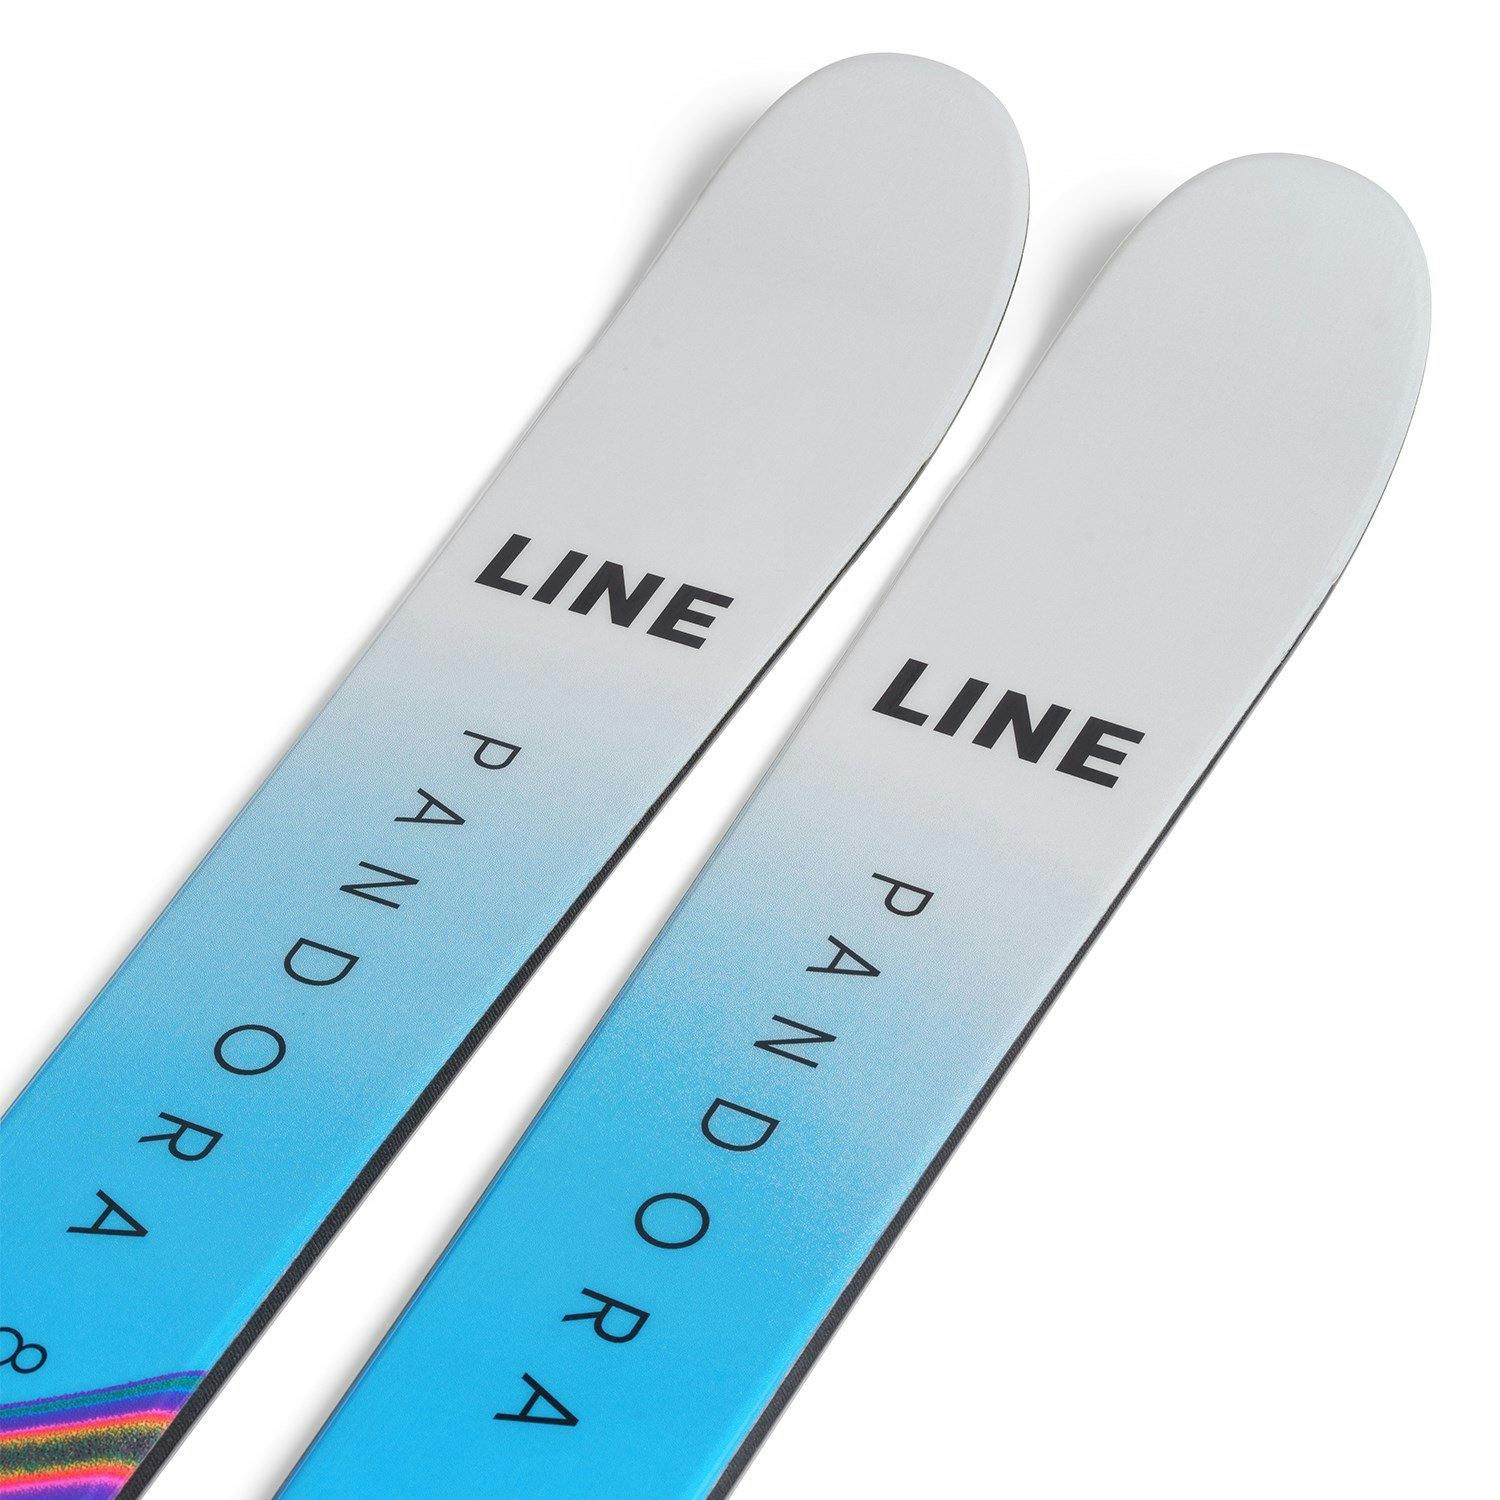 Line Pandora 84 Skis · Women's · 2023 · 158 cm